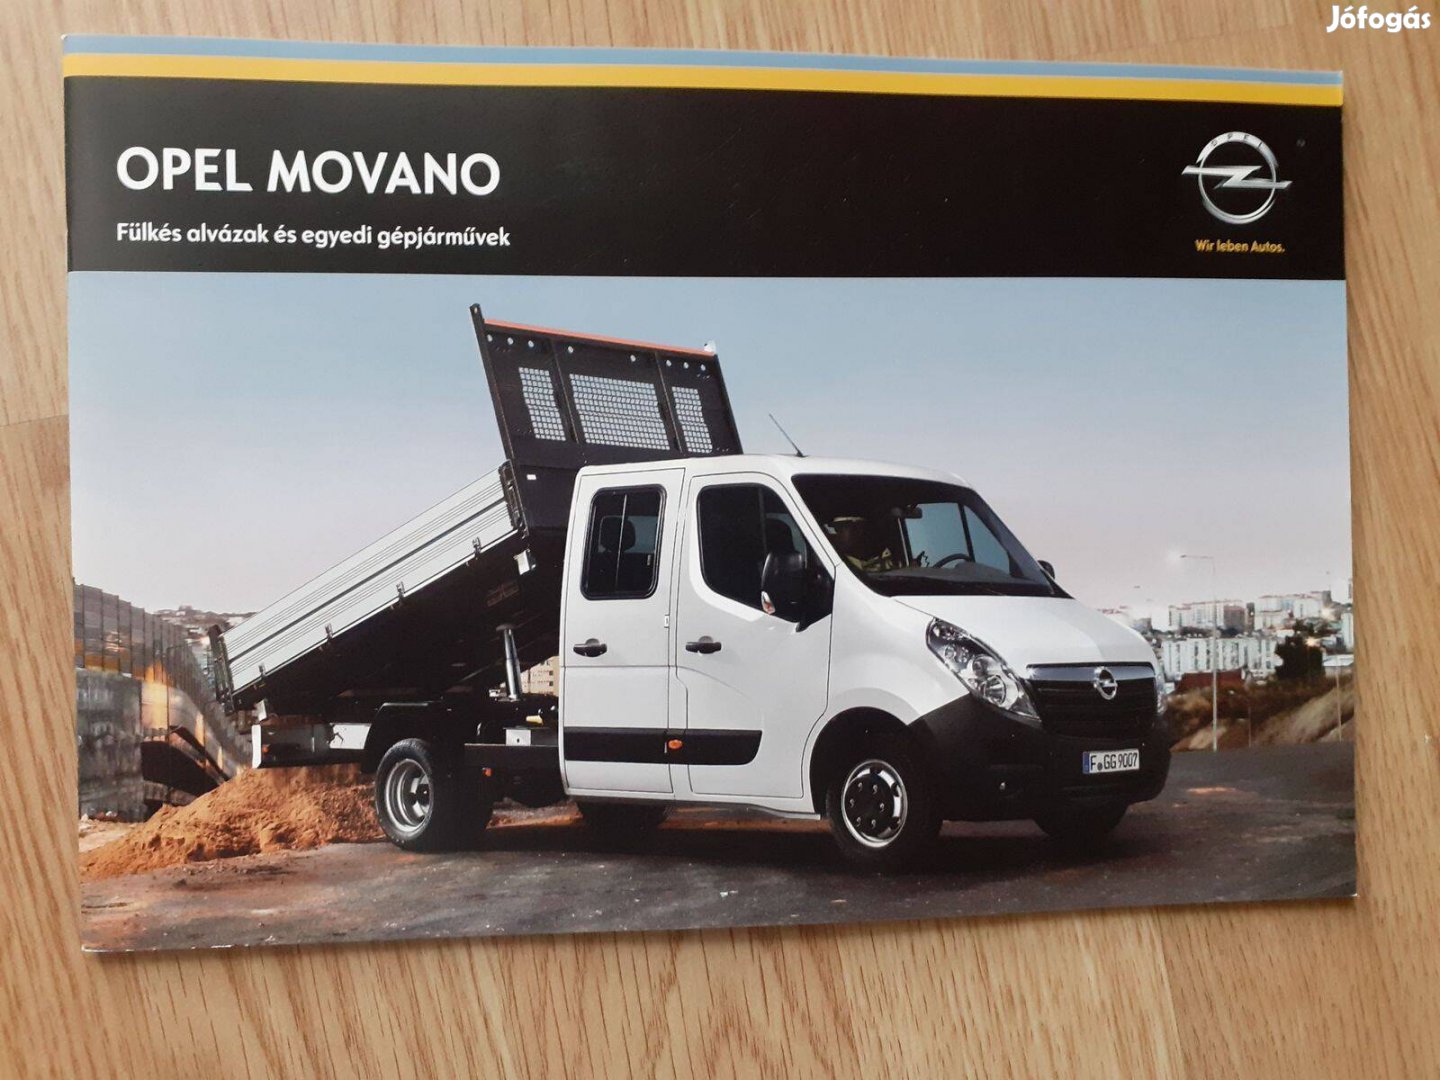 Opel Movano prospektus - 2014, magyar nyelvű